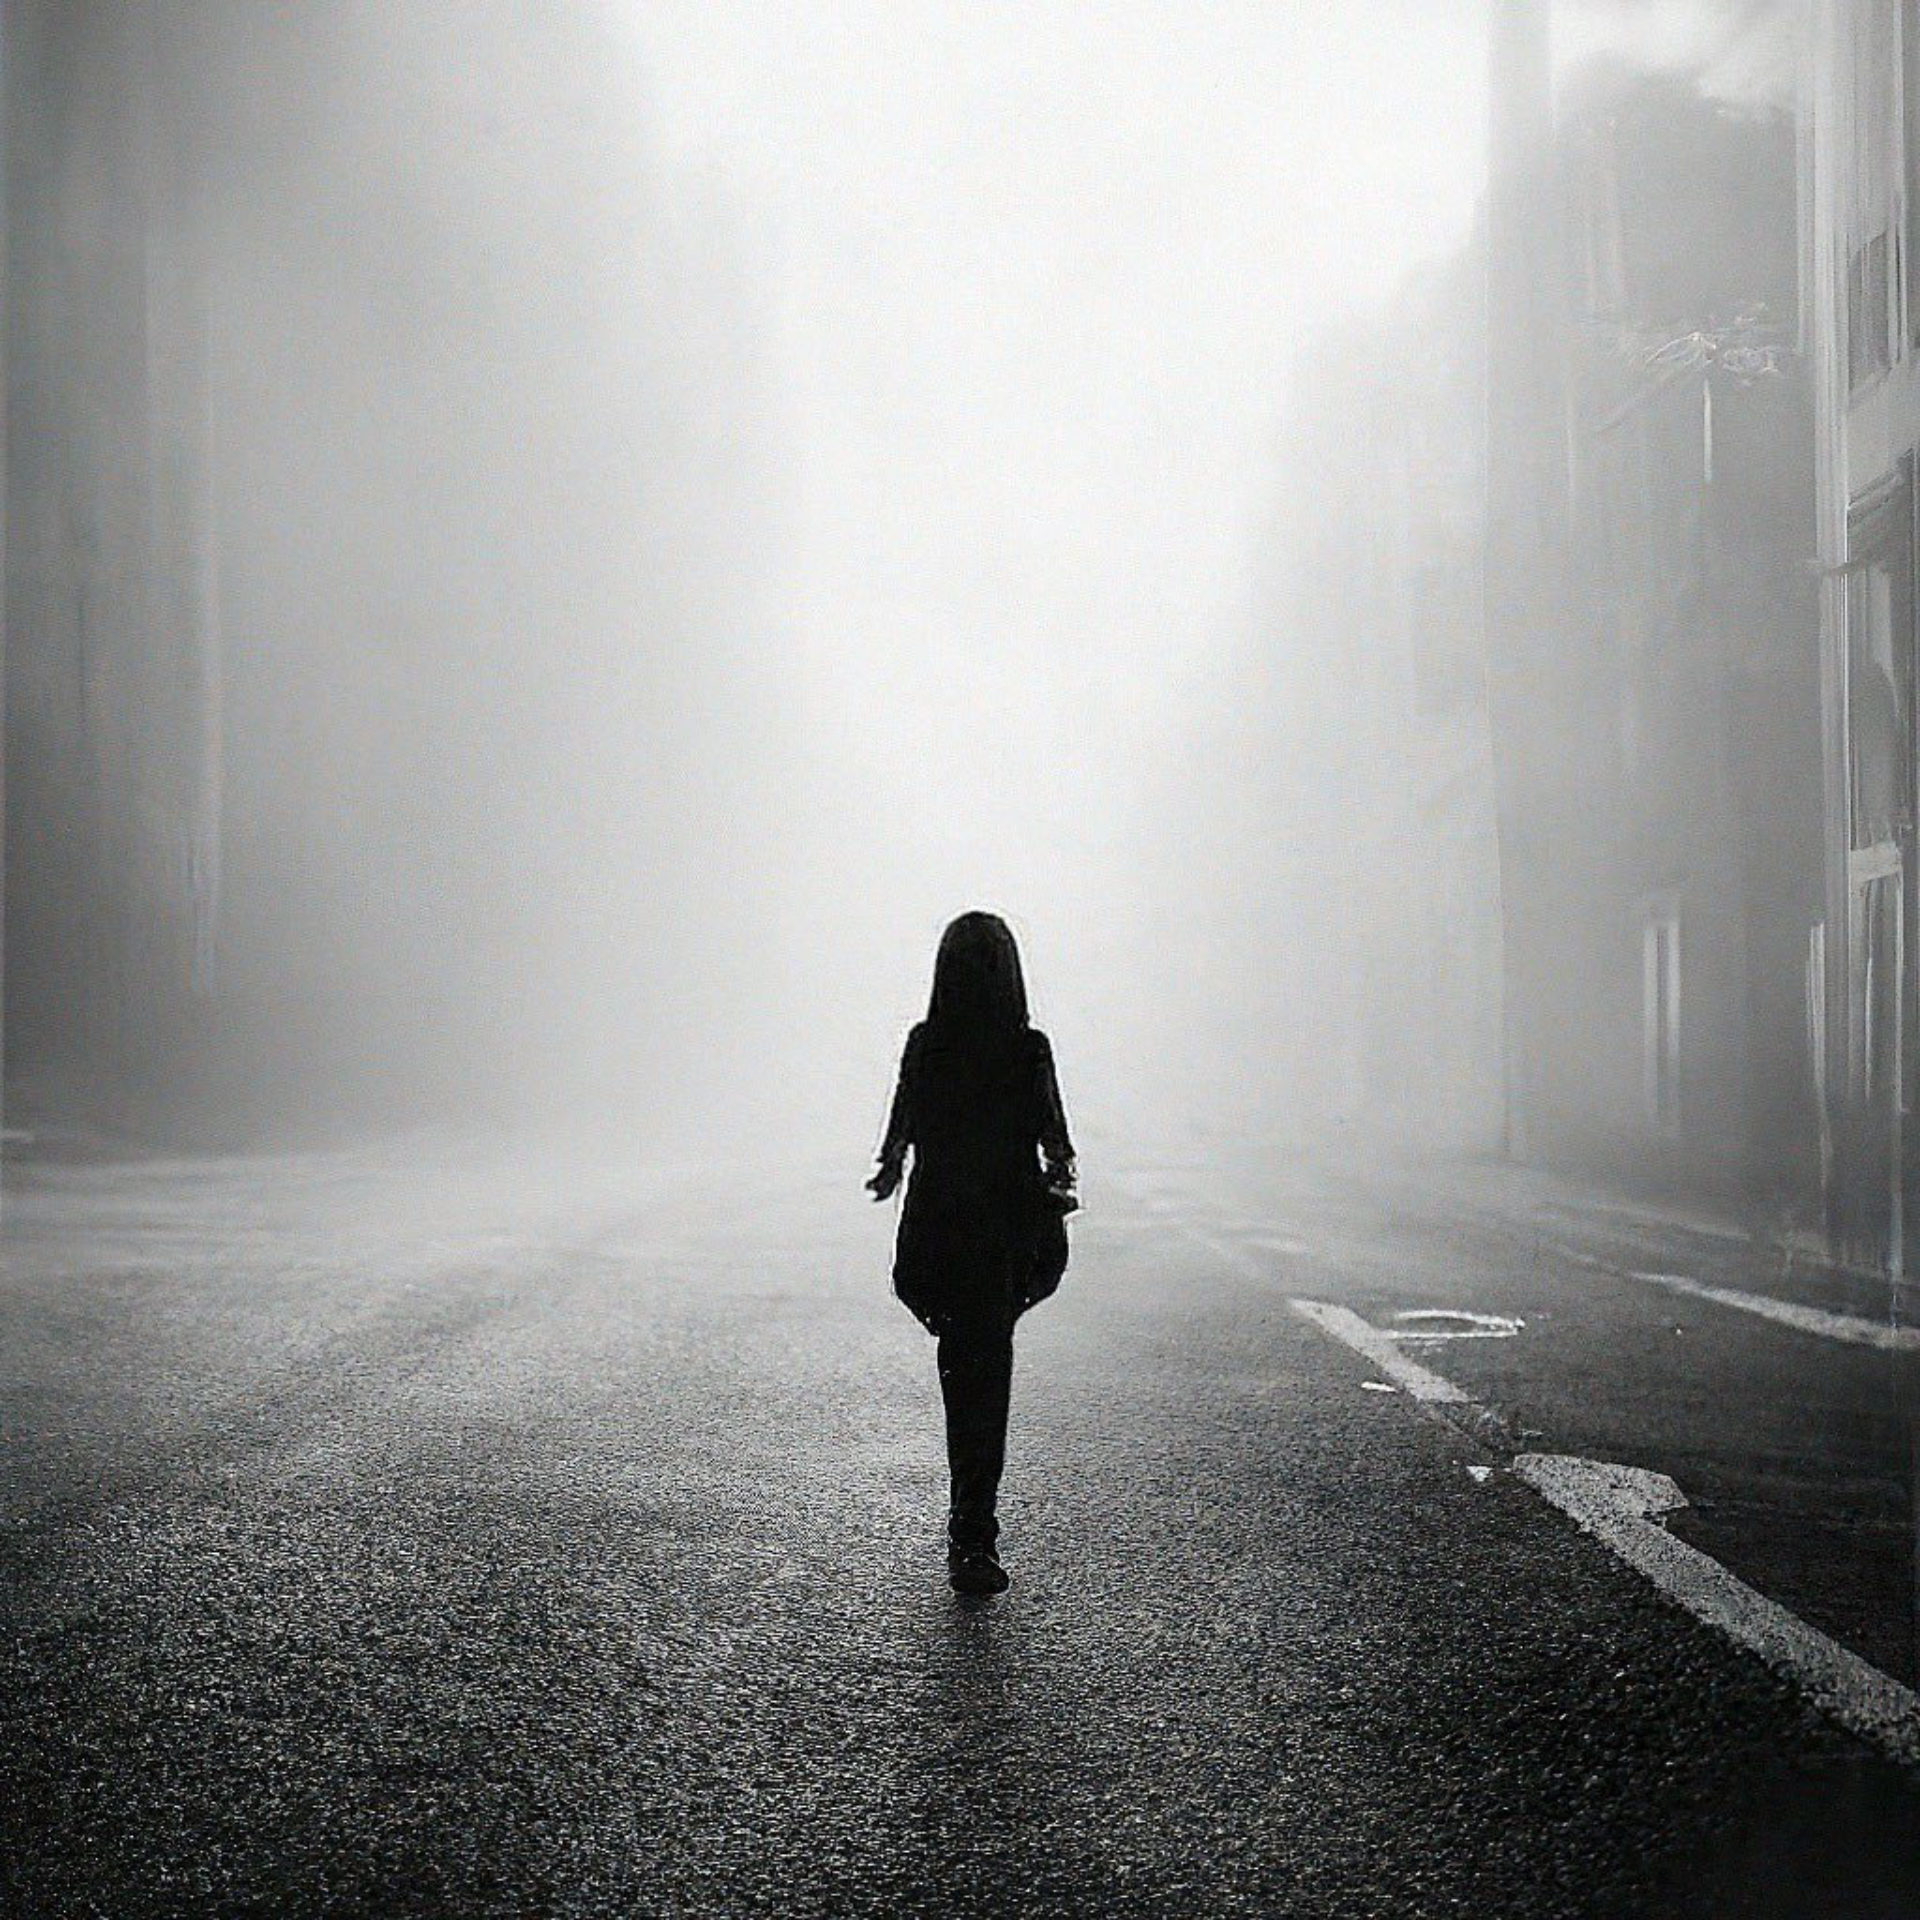 A girl walking down a dark street